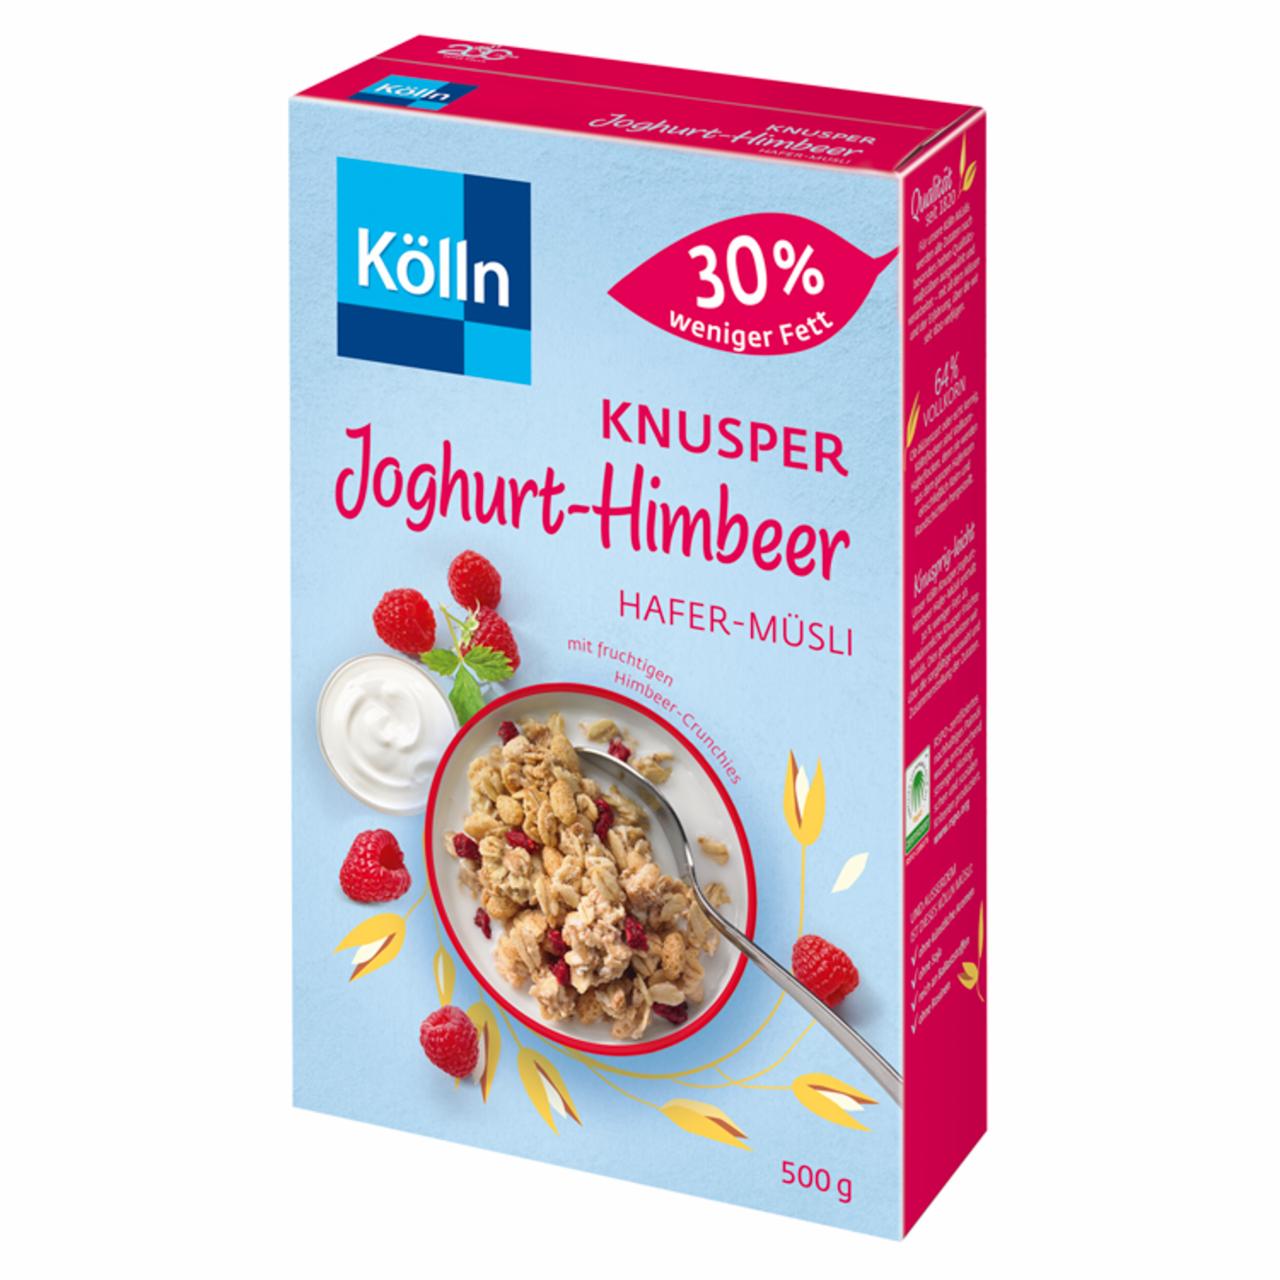 Képek - Kölln málna-joghurt ropogós müzli 500 g